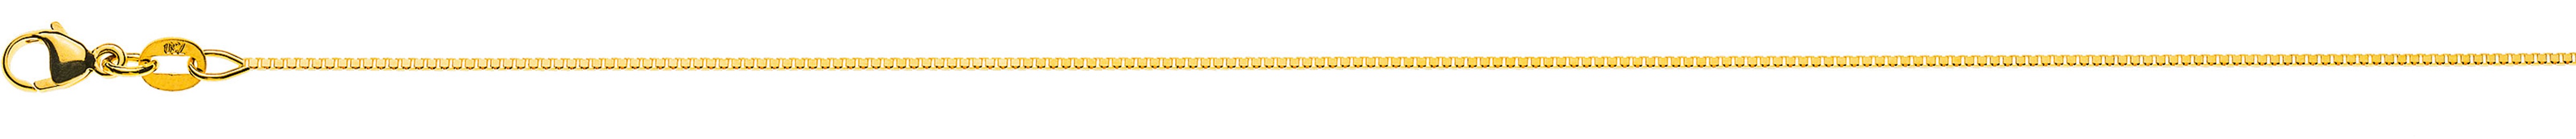 AURONOS Prestige Necklace yellow gold 18K Venetian chain diamond 55cm 0.8mm